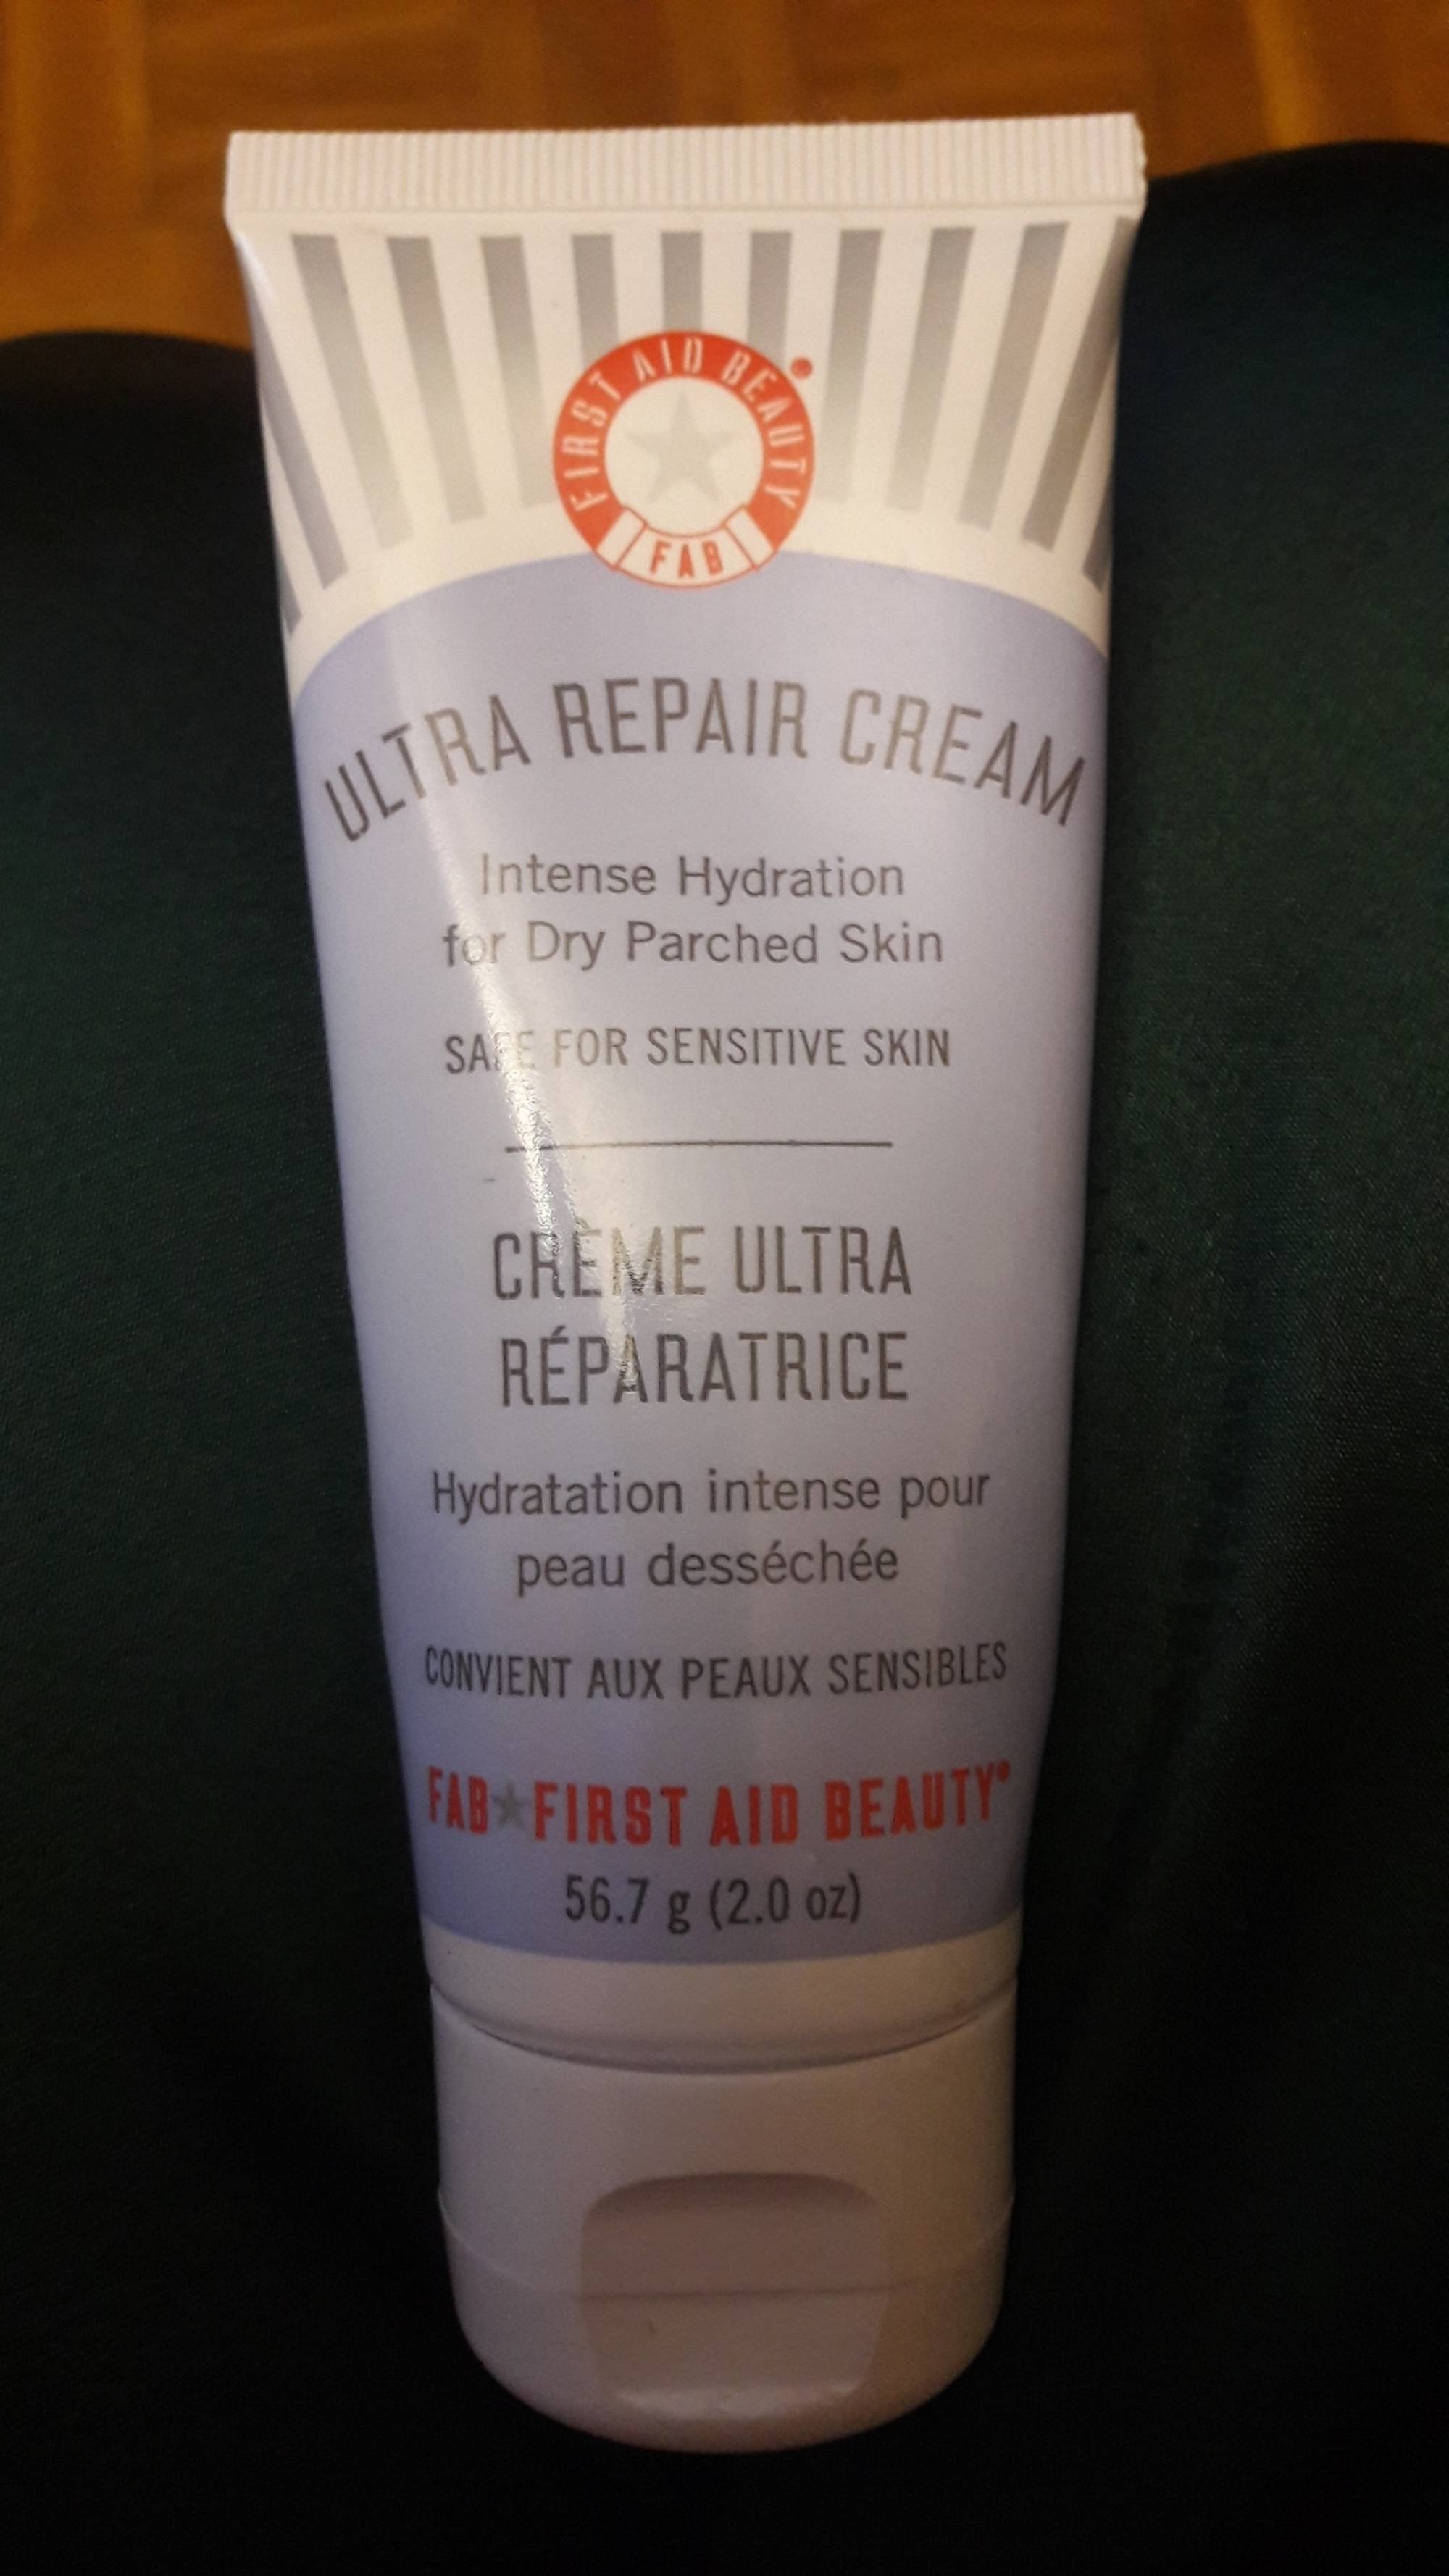 FIRST AID BEAUTY - Crème ultra réparatrice